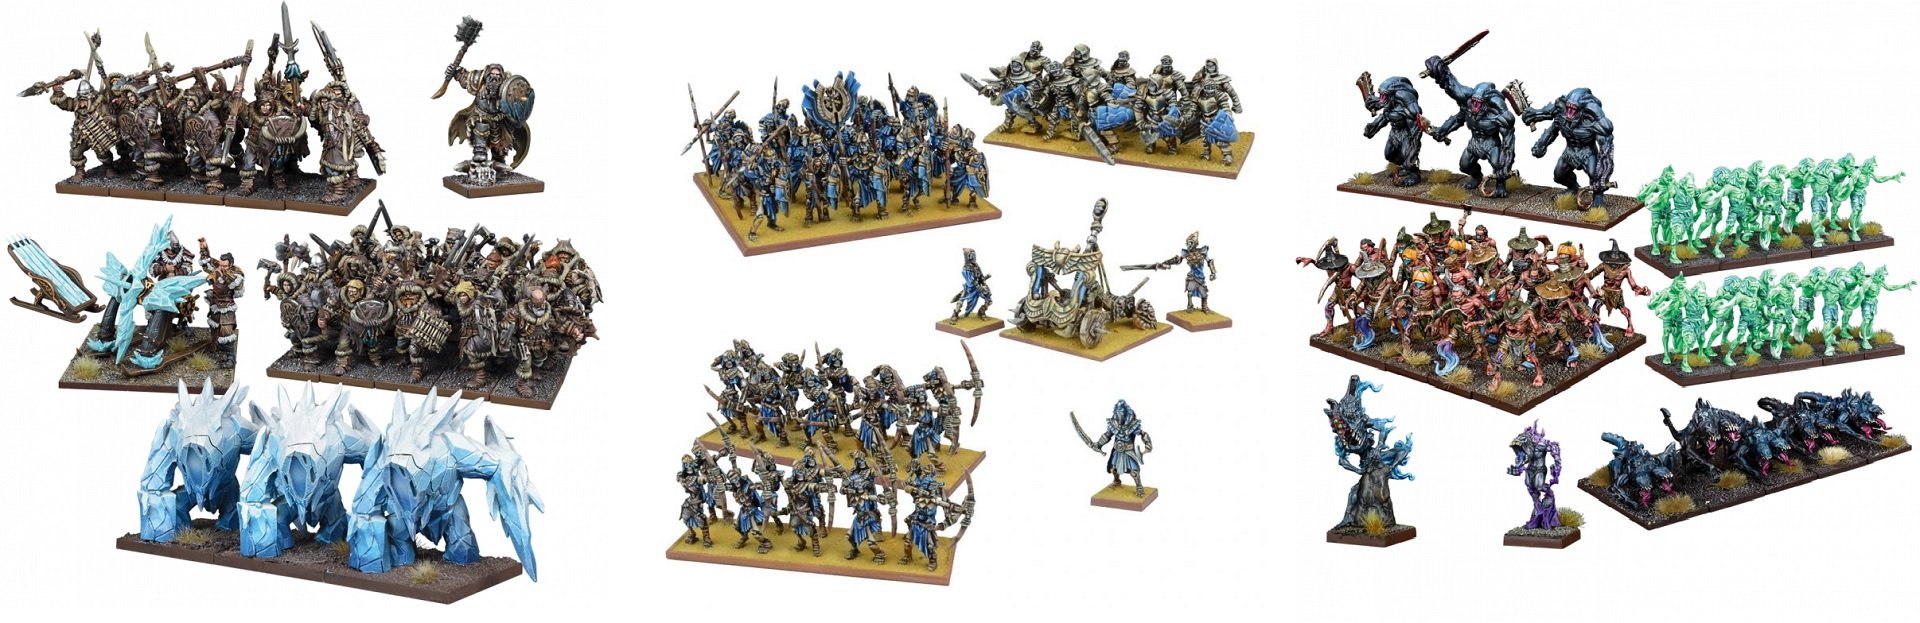 Kings of War Miniatures.